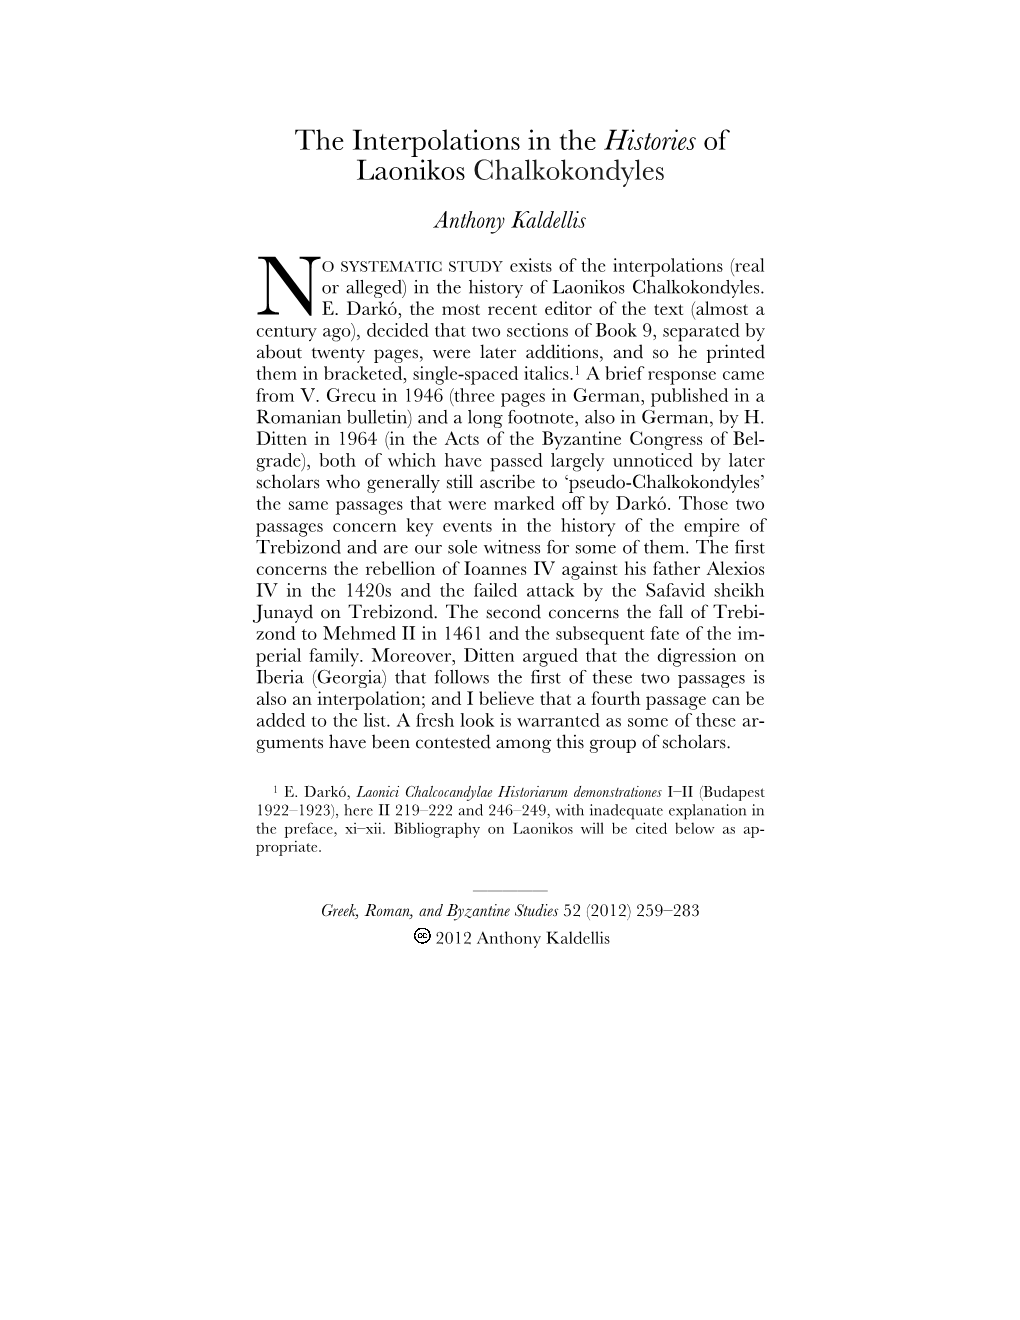 The Interpolations in the Histories of Laonikos Chalkokondyles Anthony Kaldellis